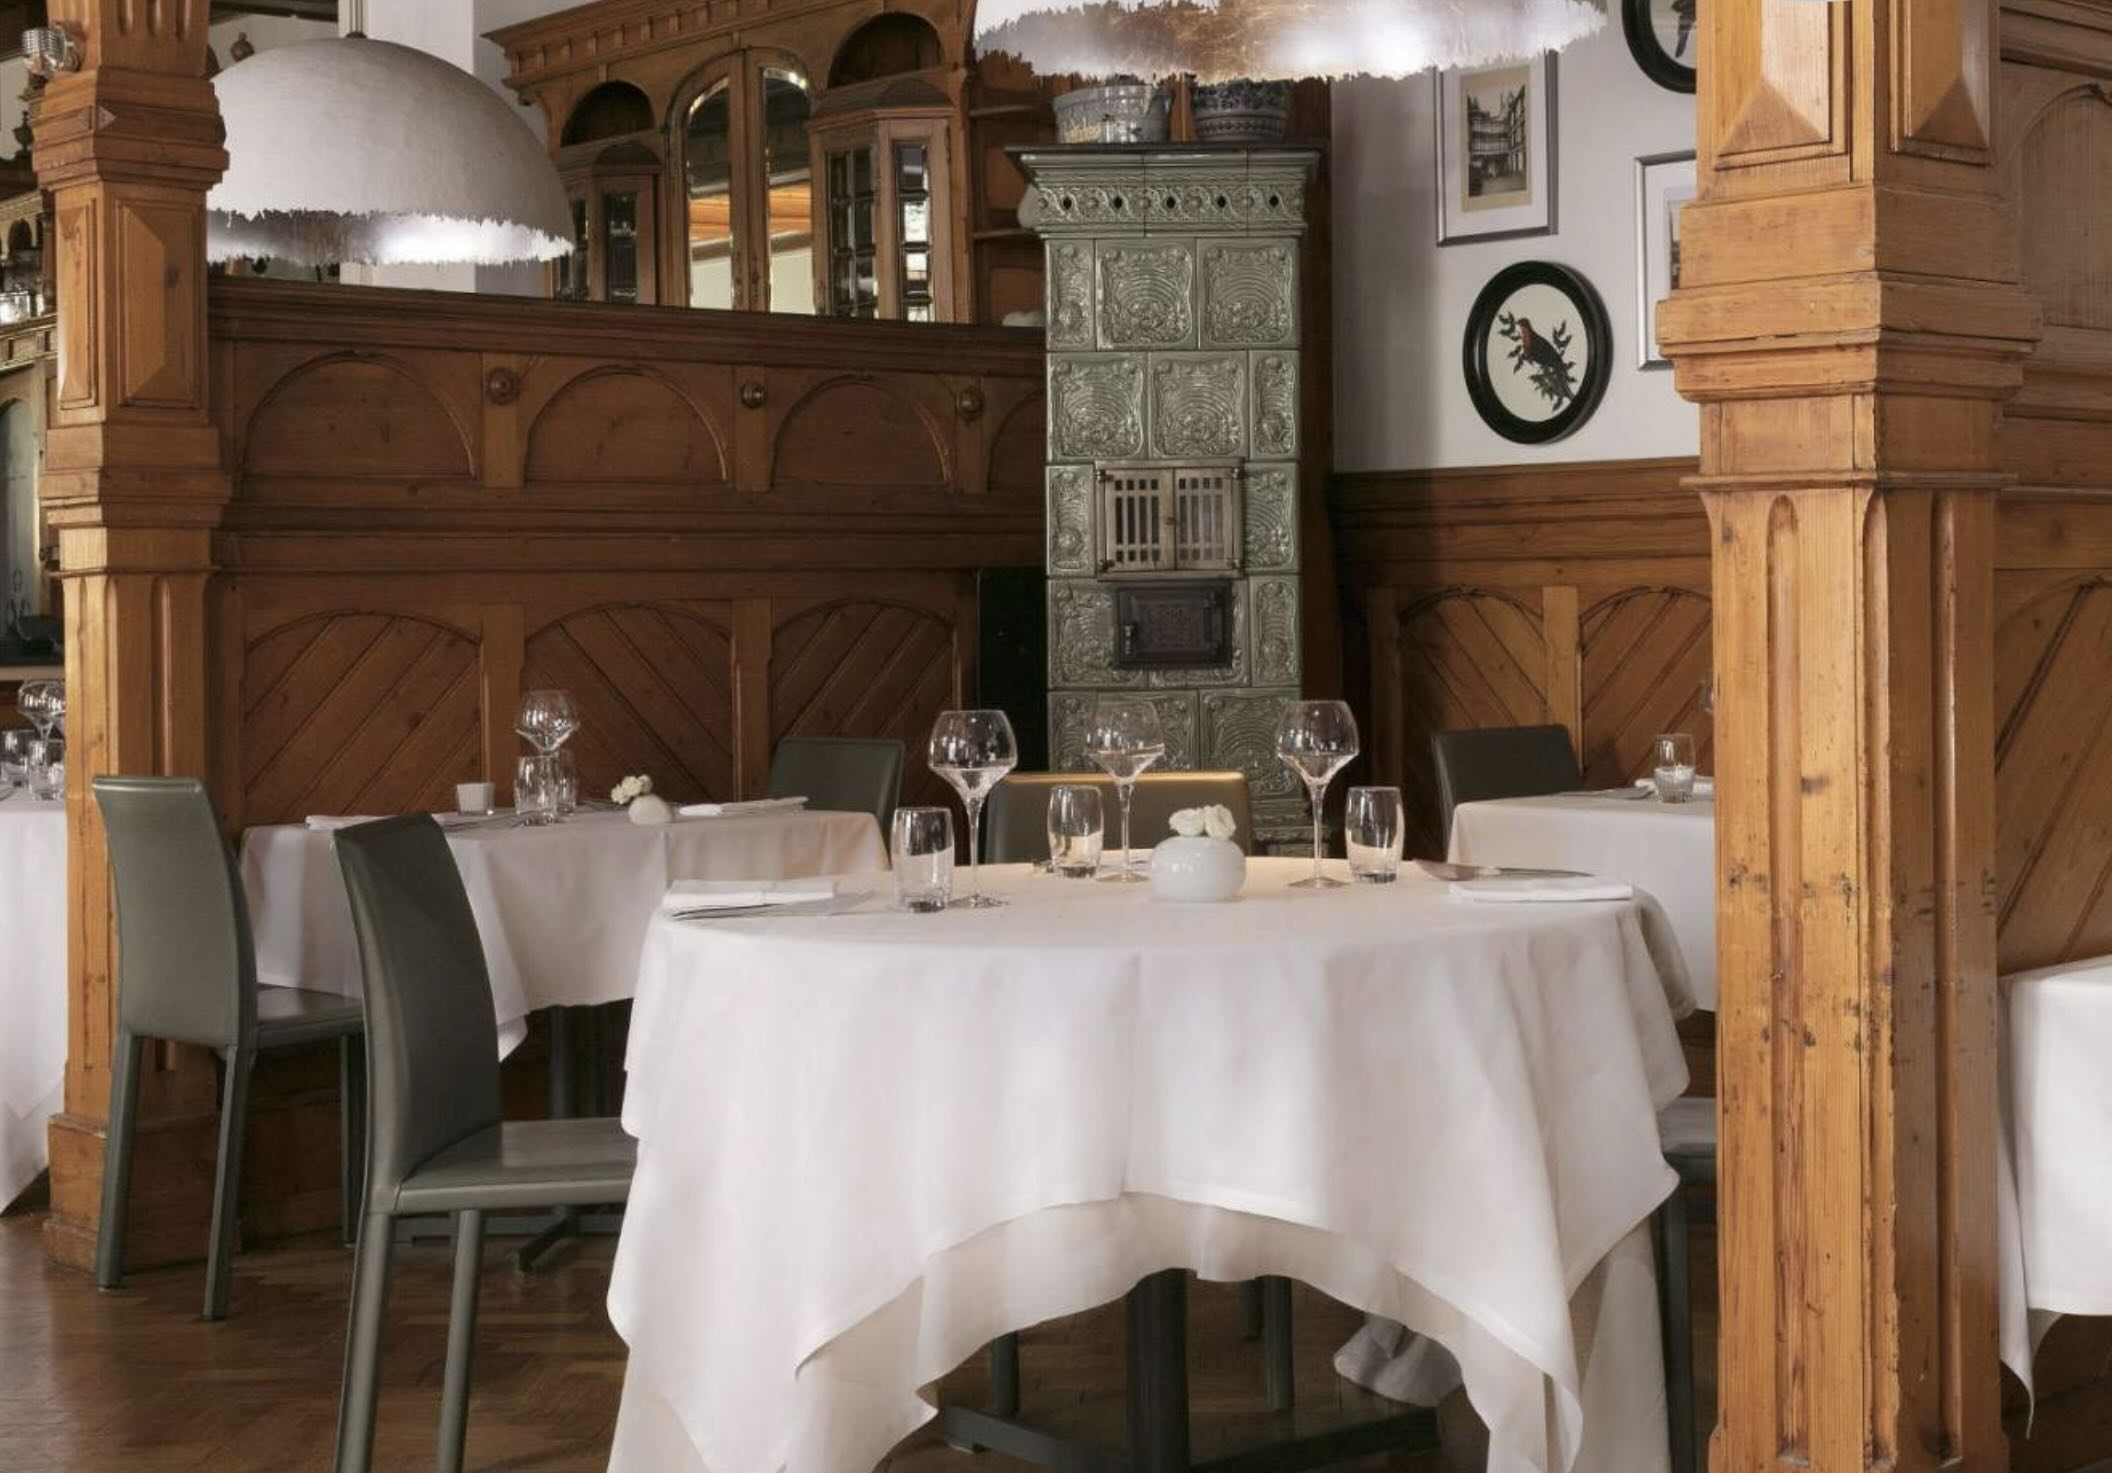 Brasserie Historique is another great restaurant in Colmar. Photo by Brasserie Historique